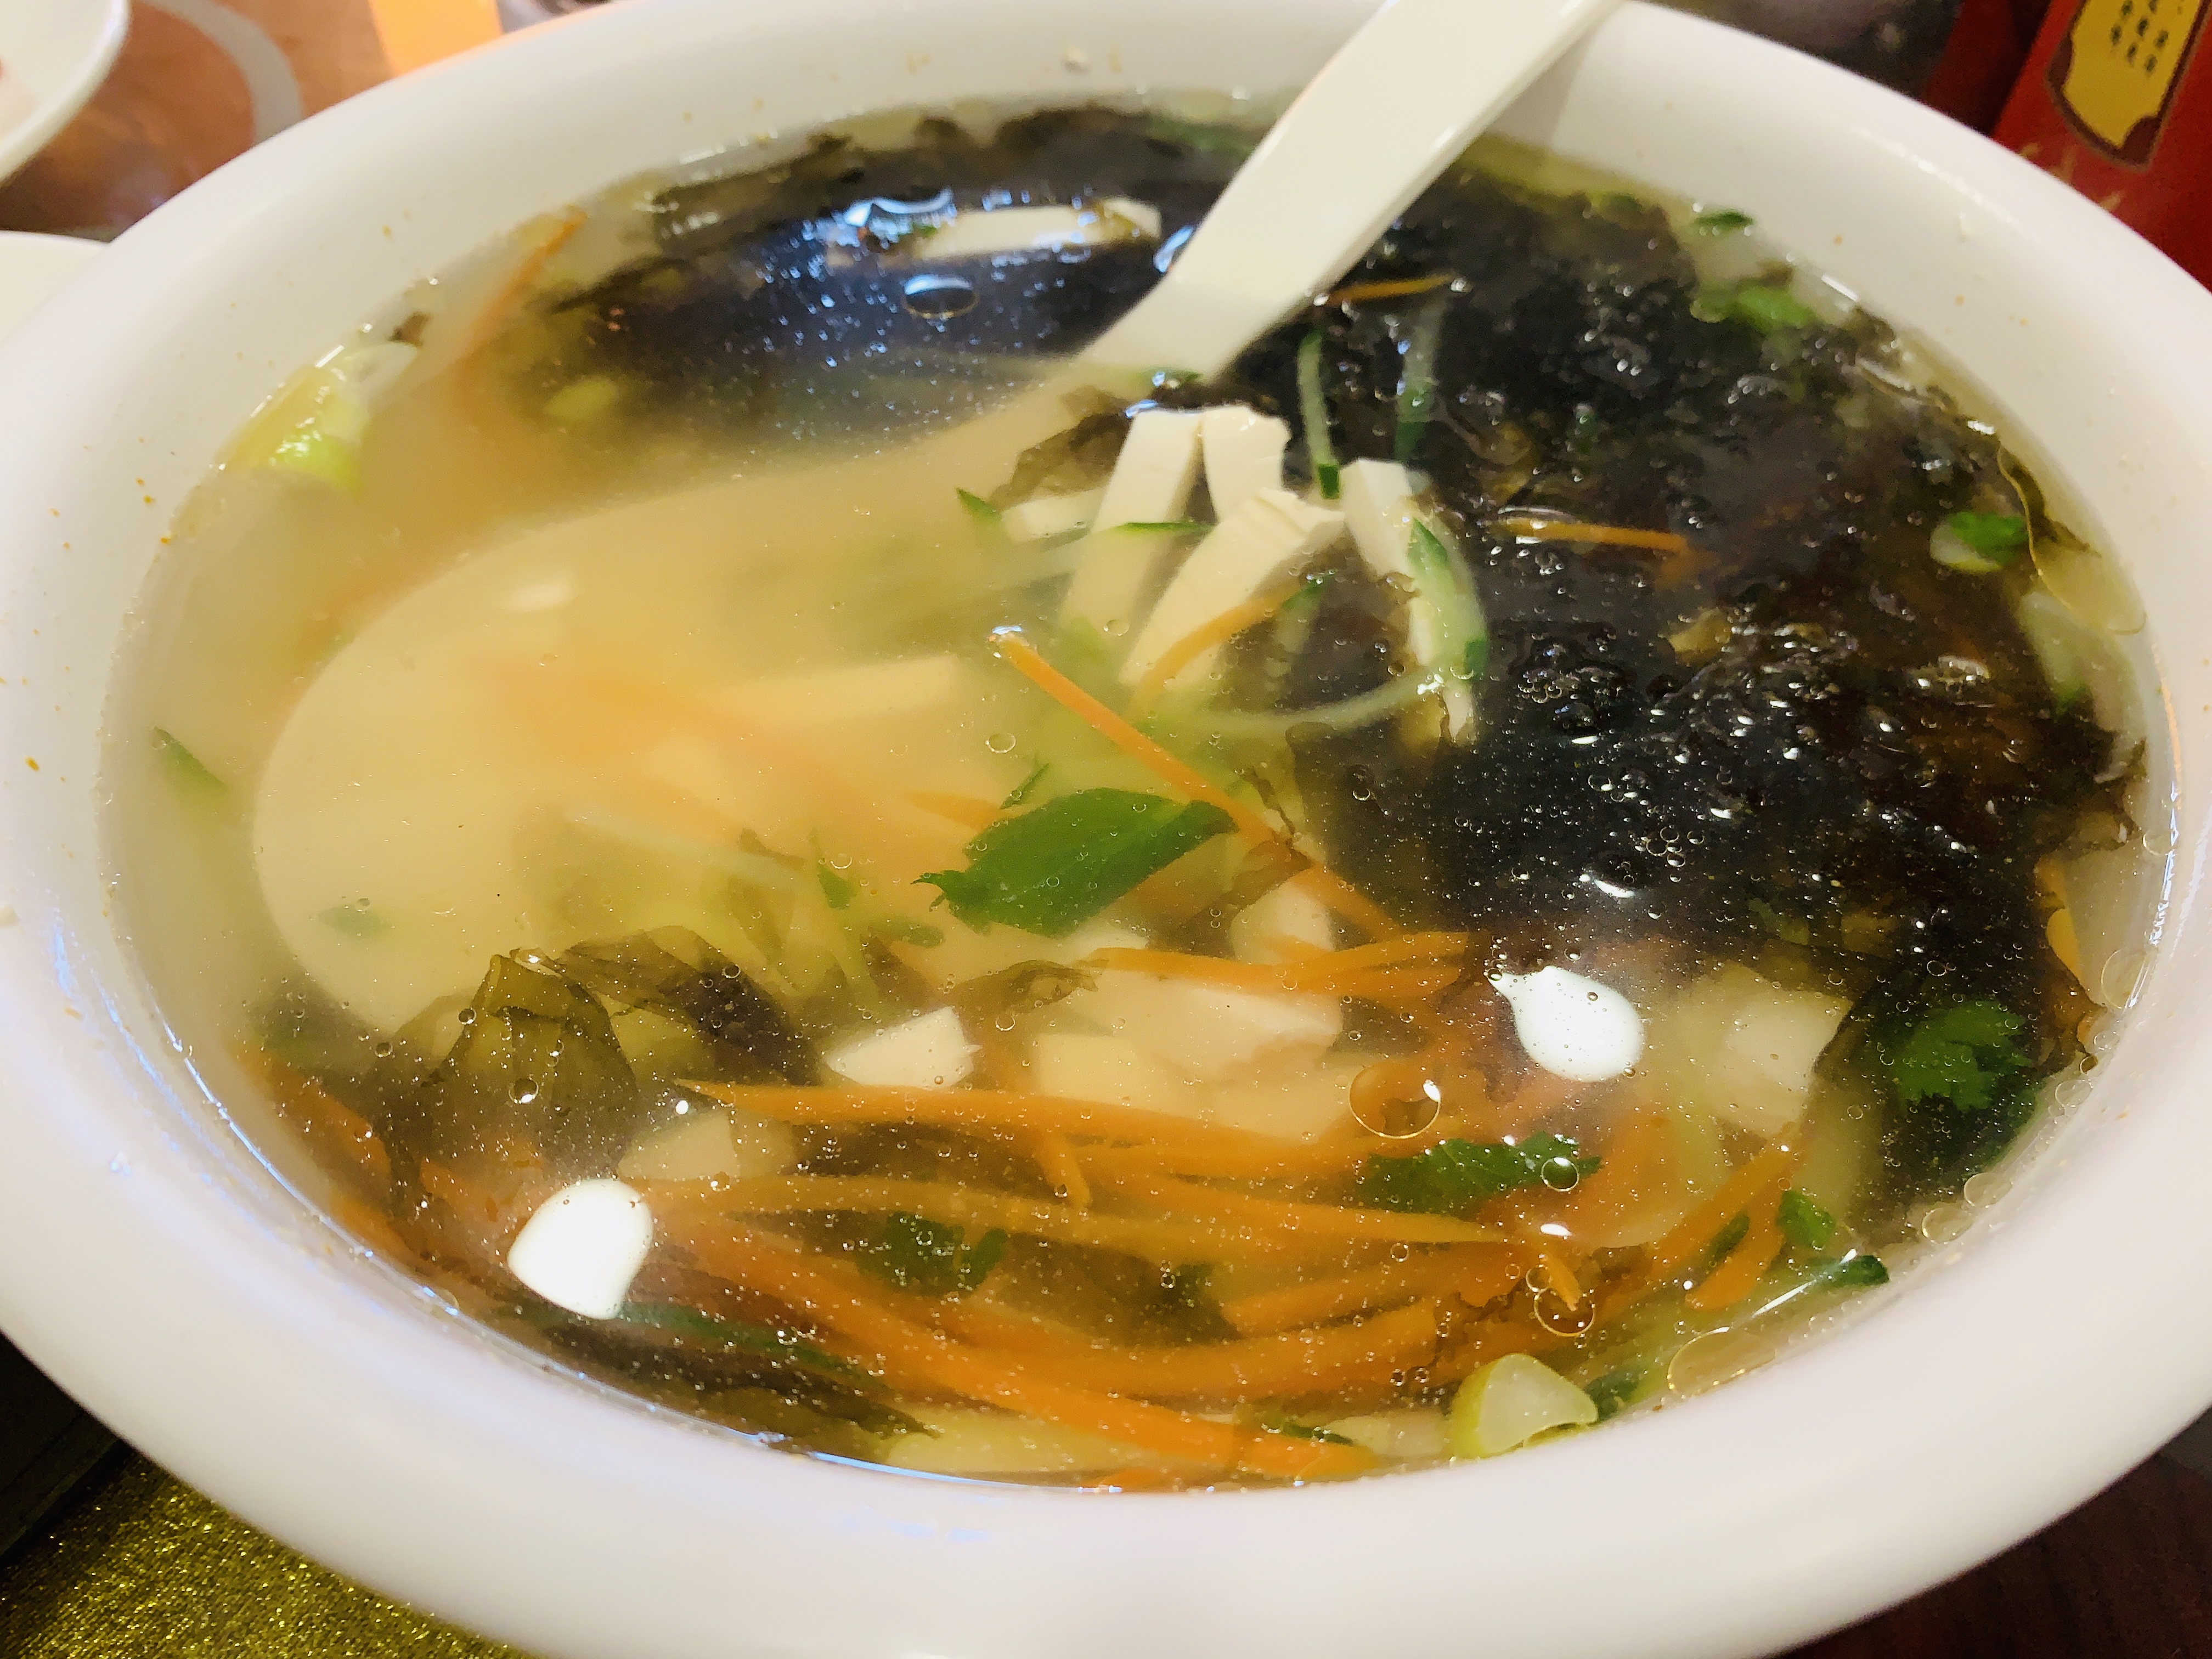 Dong Bei Ren Jia - Laver and Tofu Soup